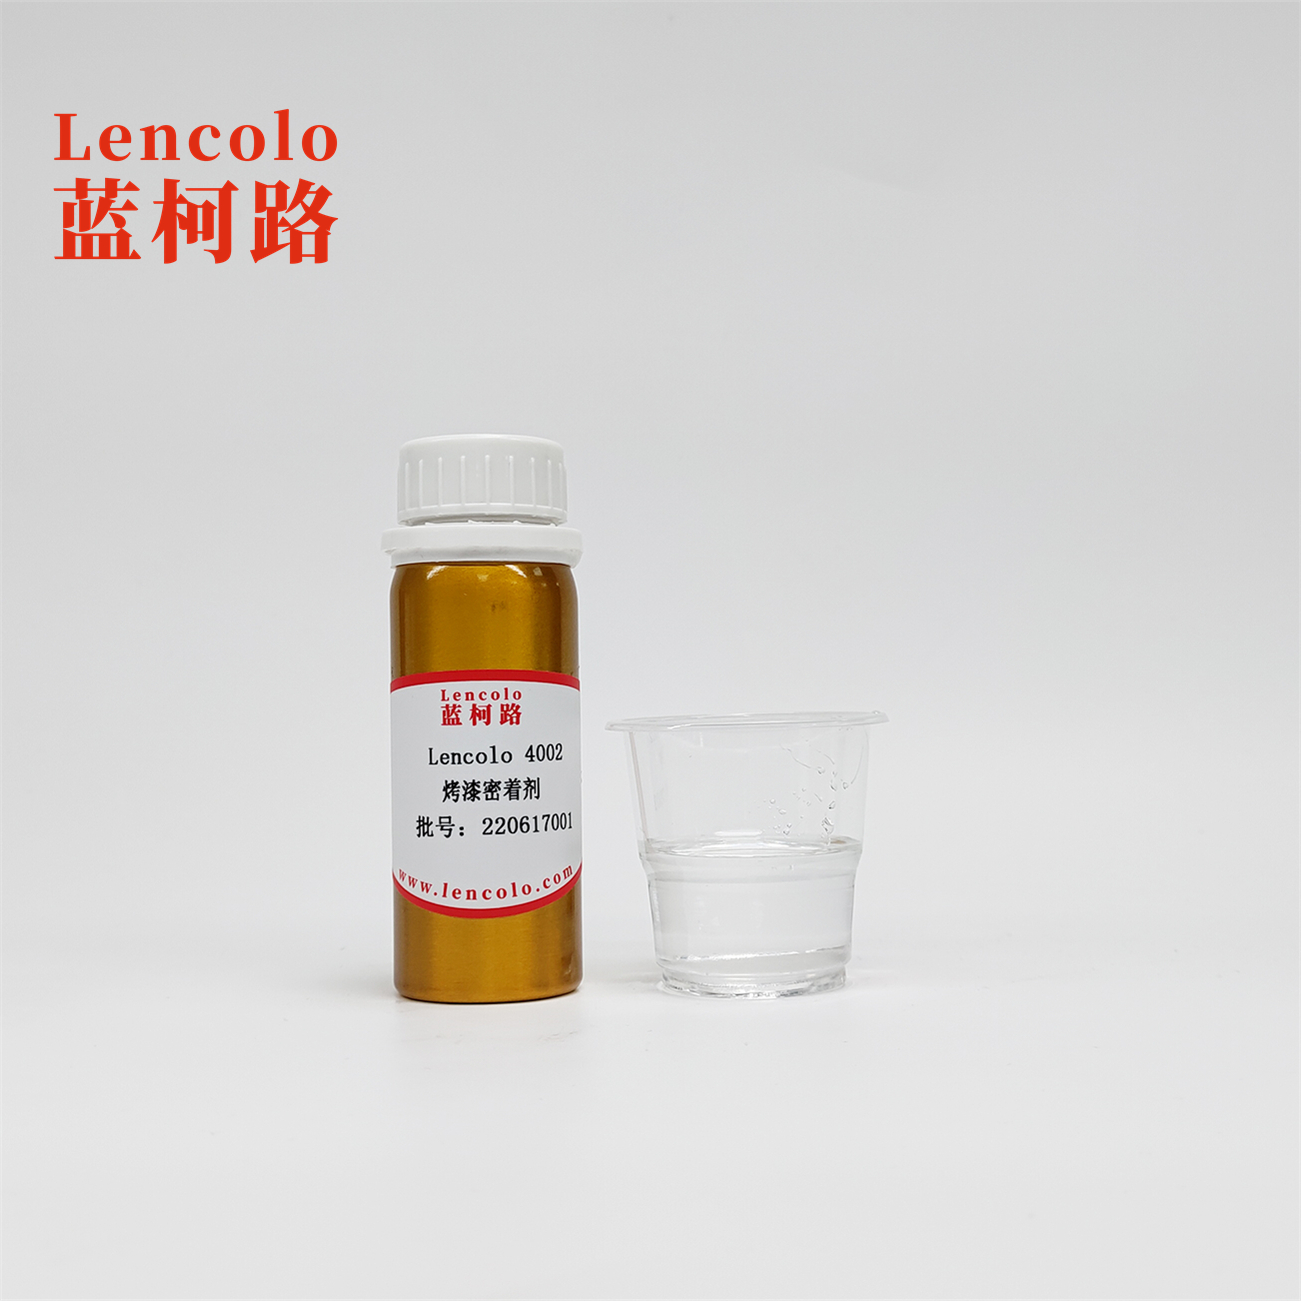 Lencolo 4002  Baking Paint Adhesion Promoter to improve adhesion uv resin baking coatings